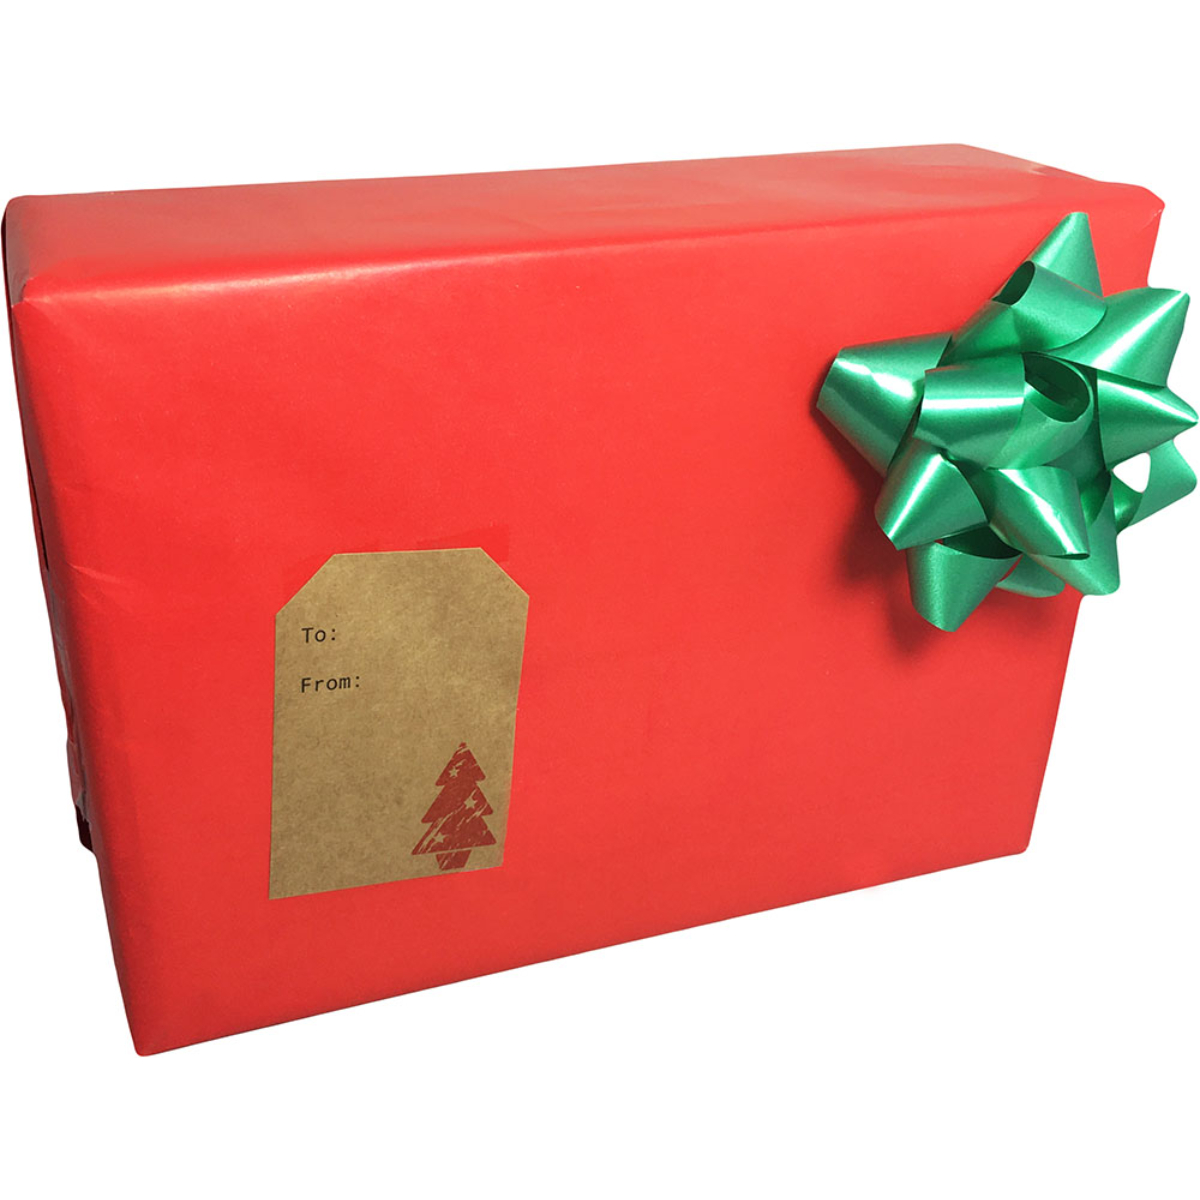 Kraft Gift Tags for Rustic Christmas Decor Gift Wrapping